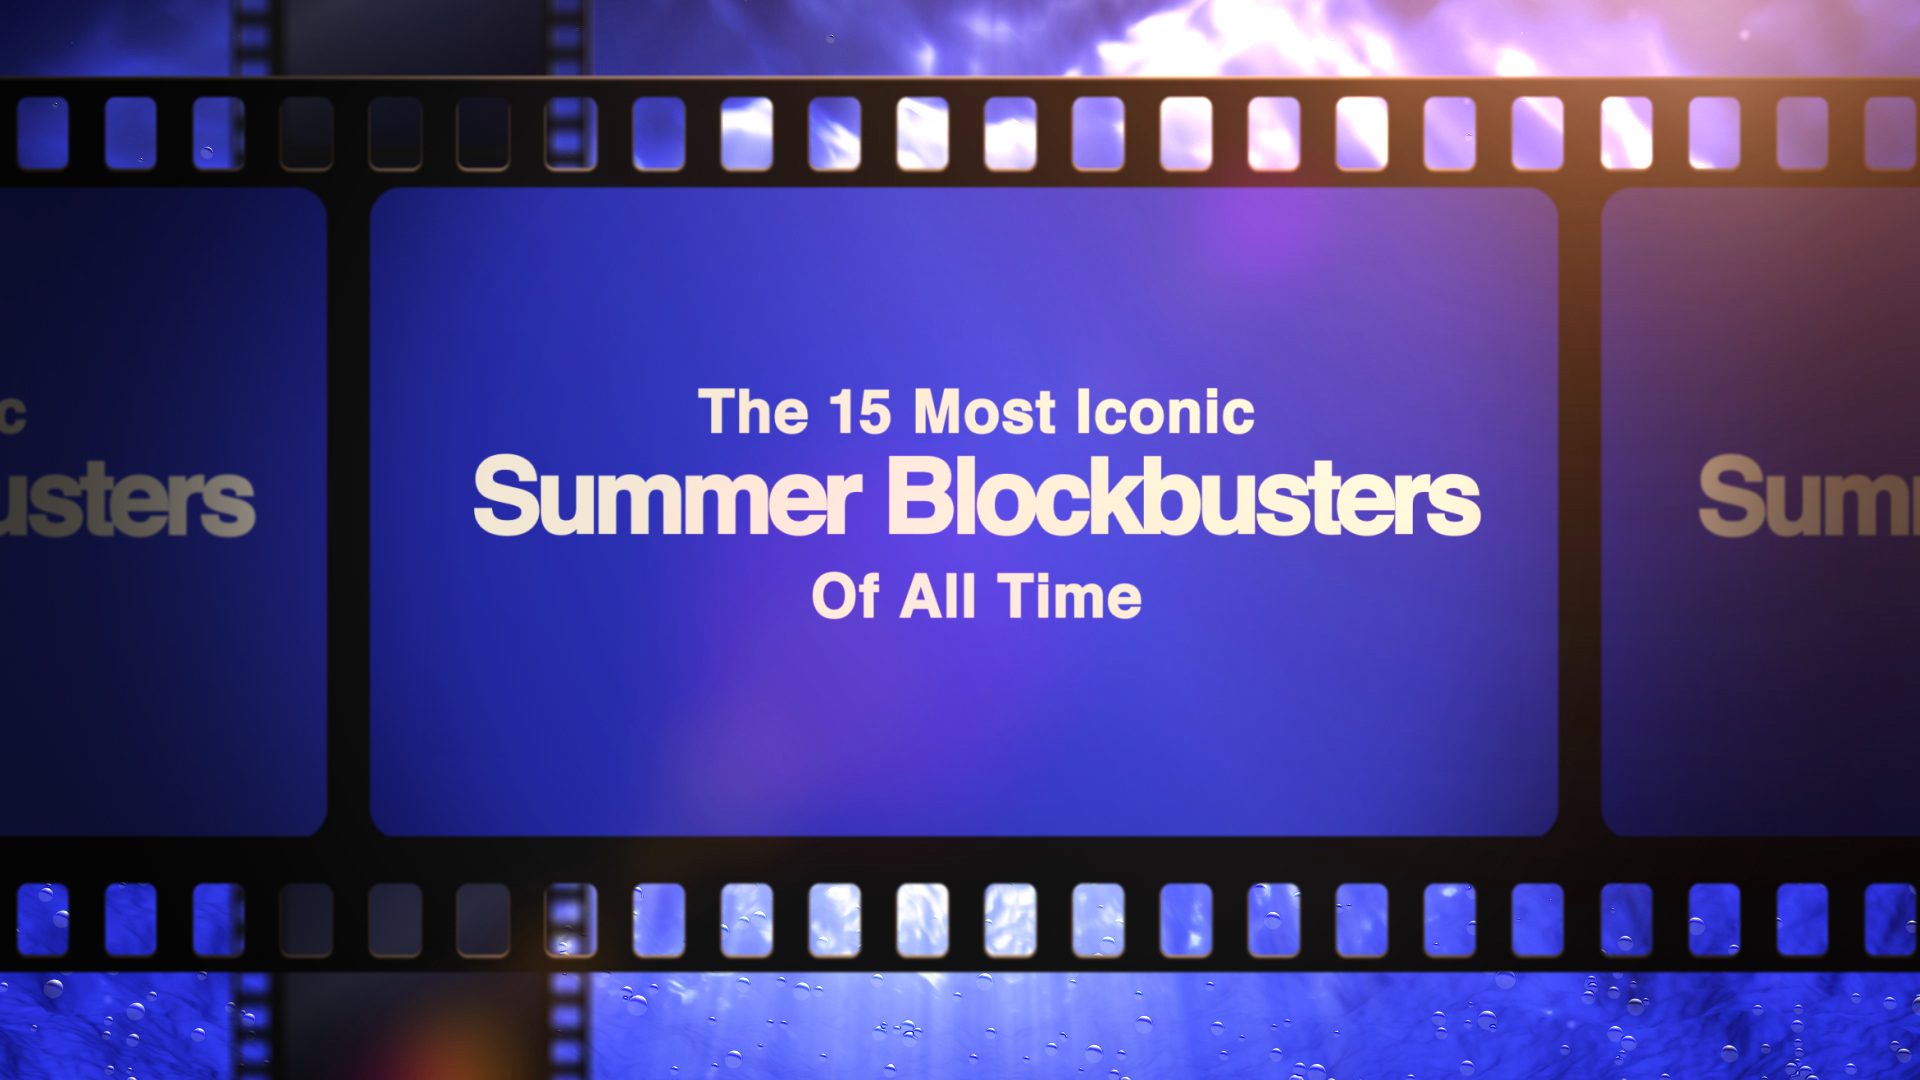 Iconic Summer Blockbusters